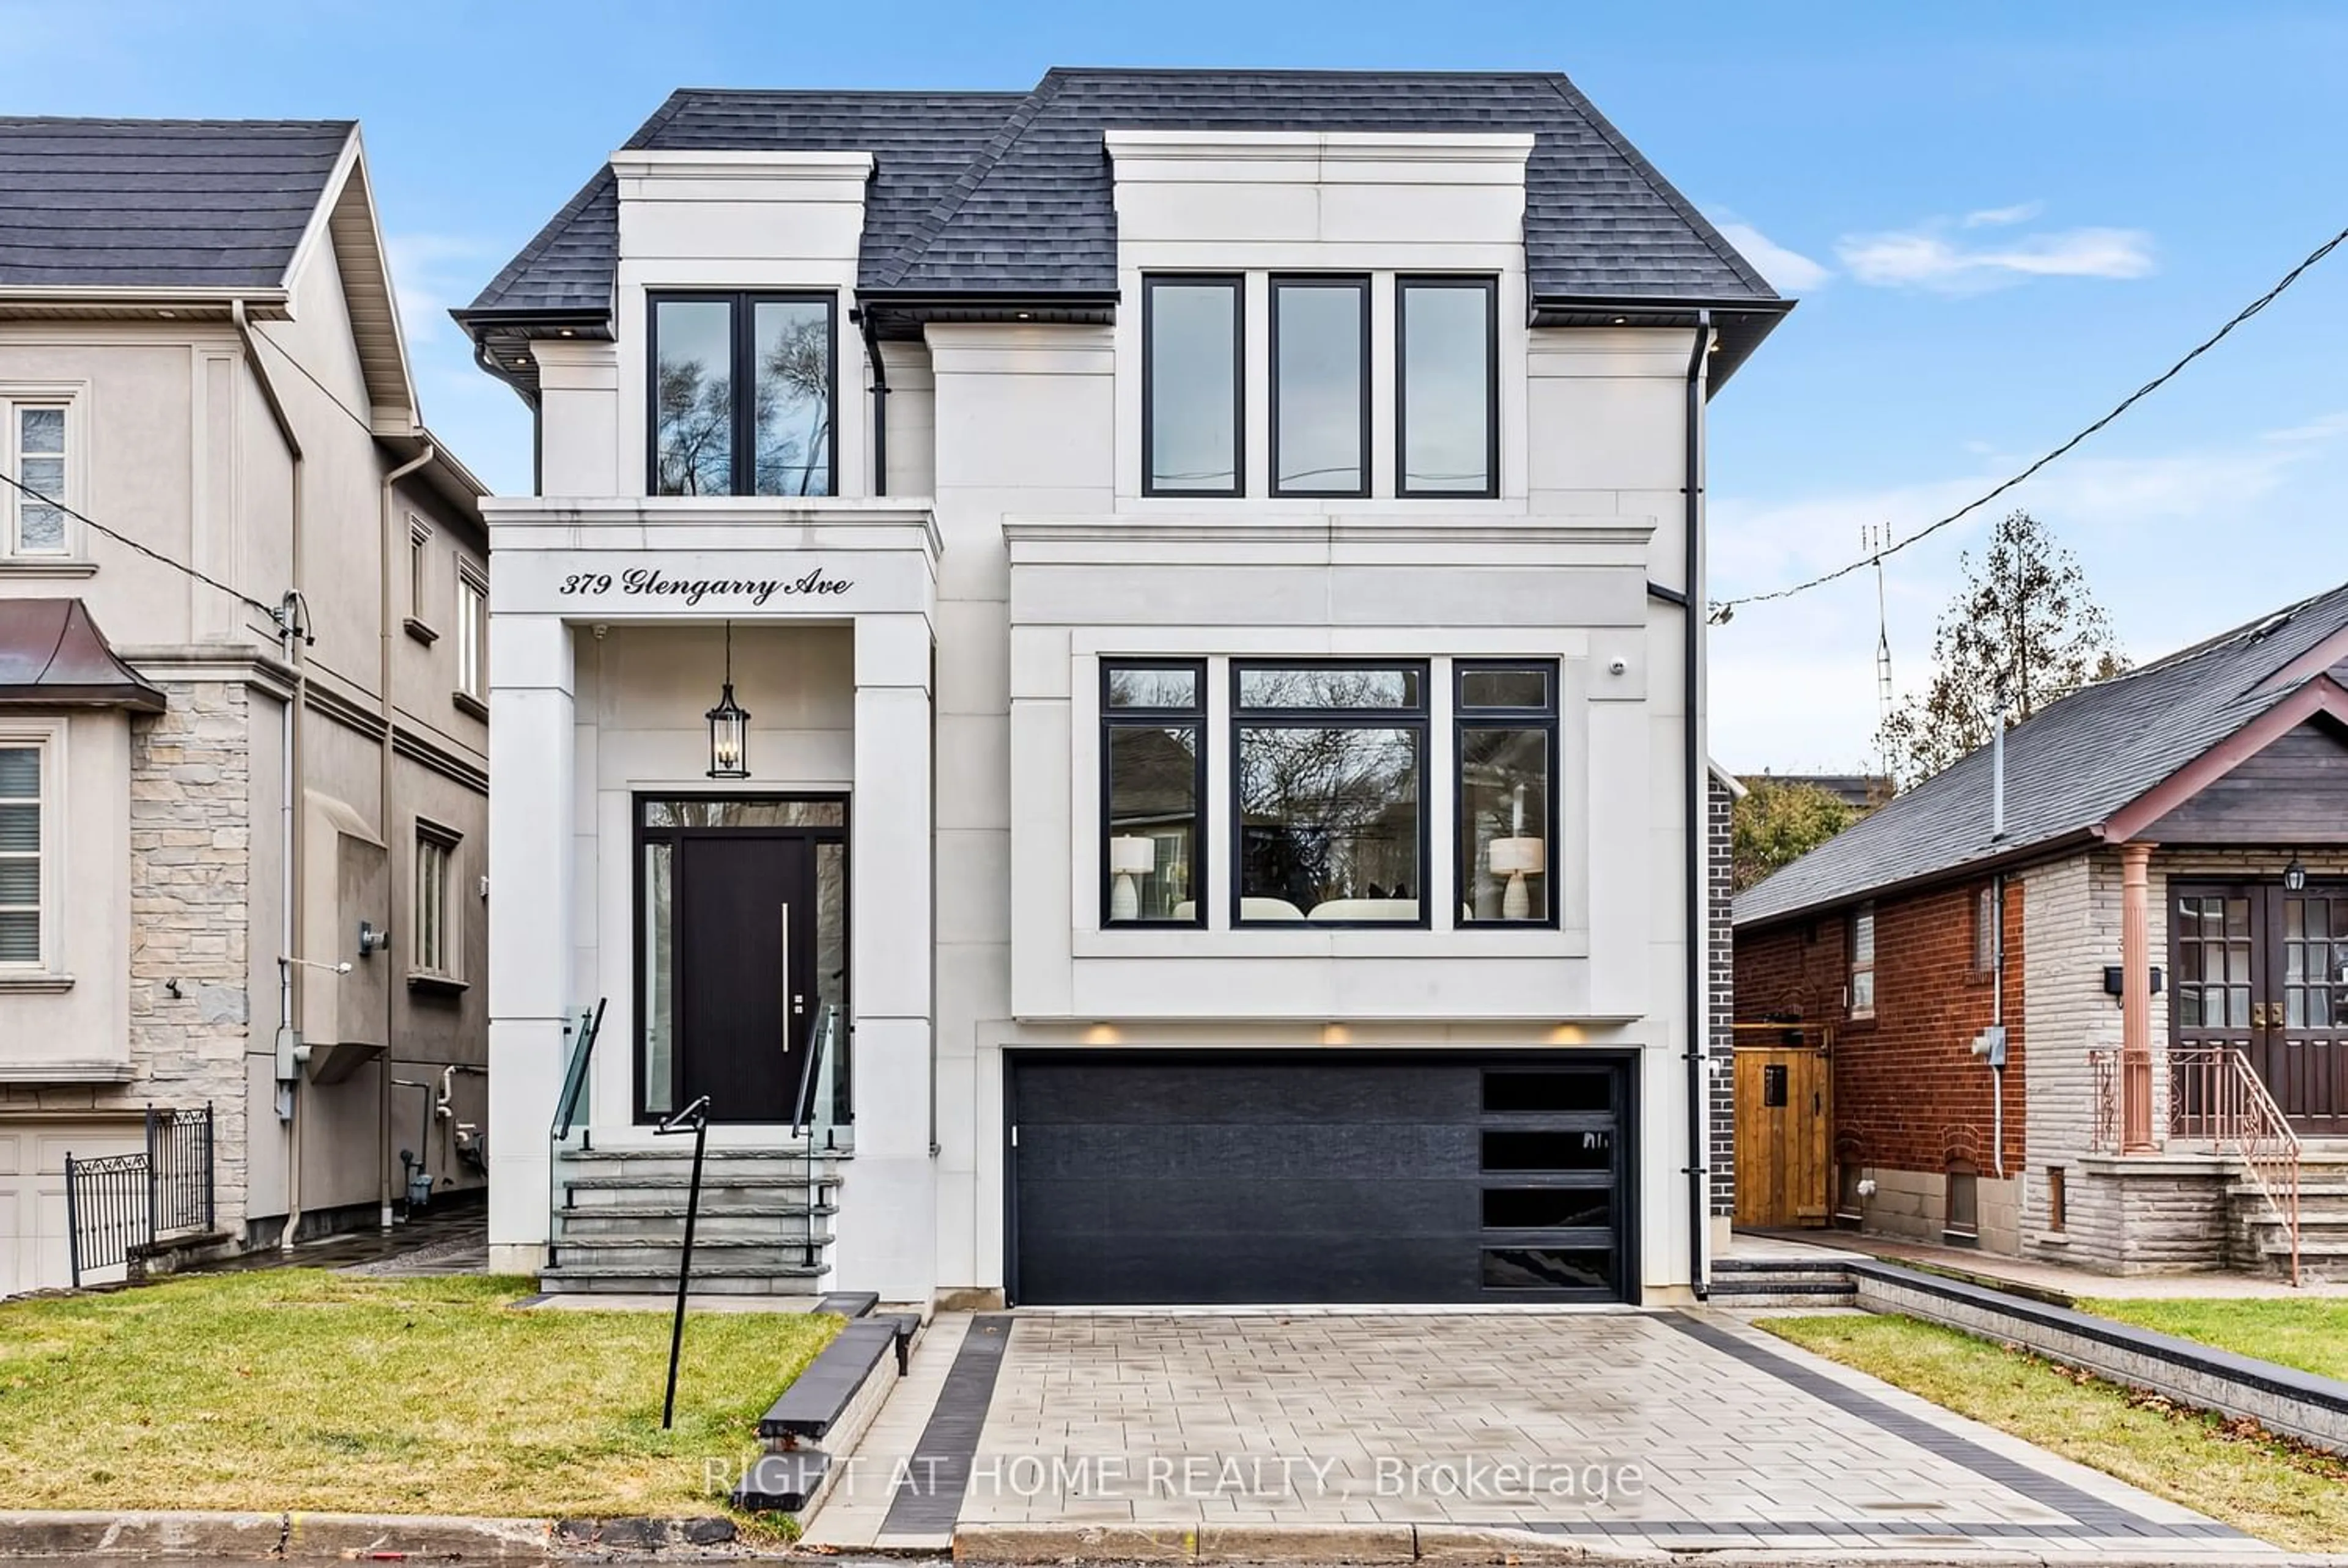 Home with brick exterior material for 379 Glengarry Ave, Toronto Ontario M5M 1E7